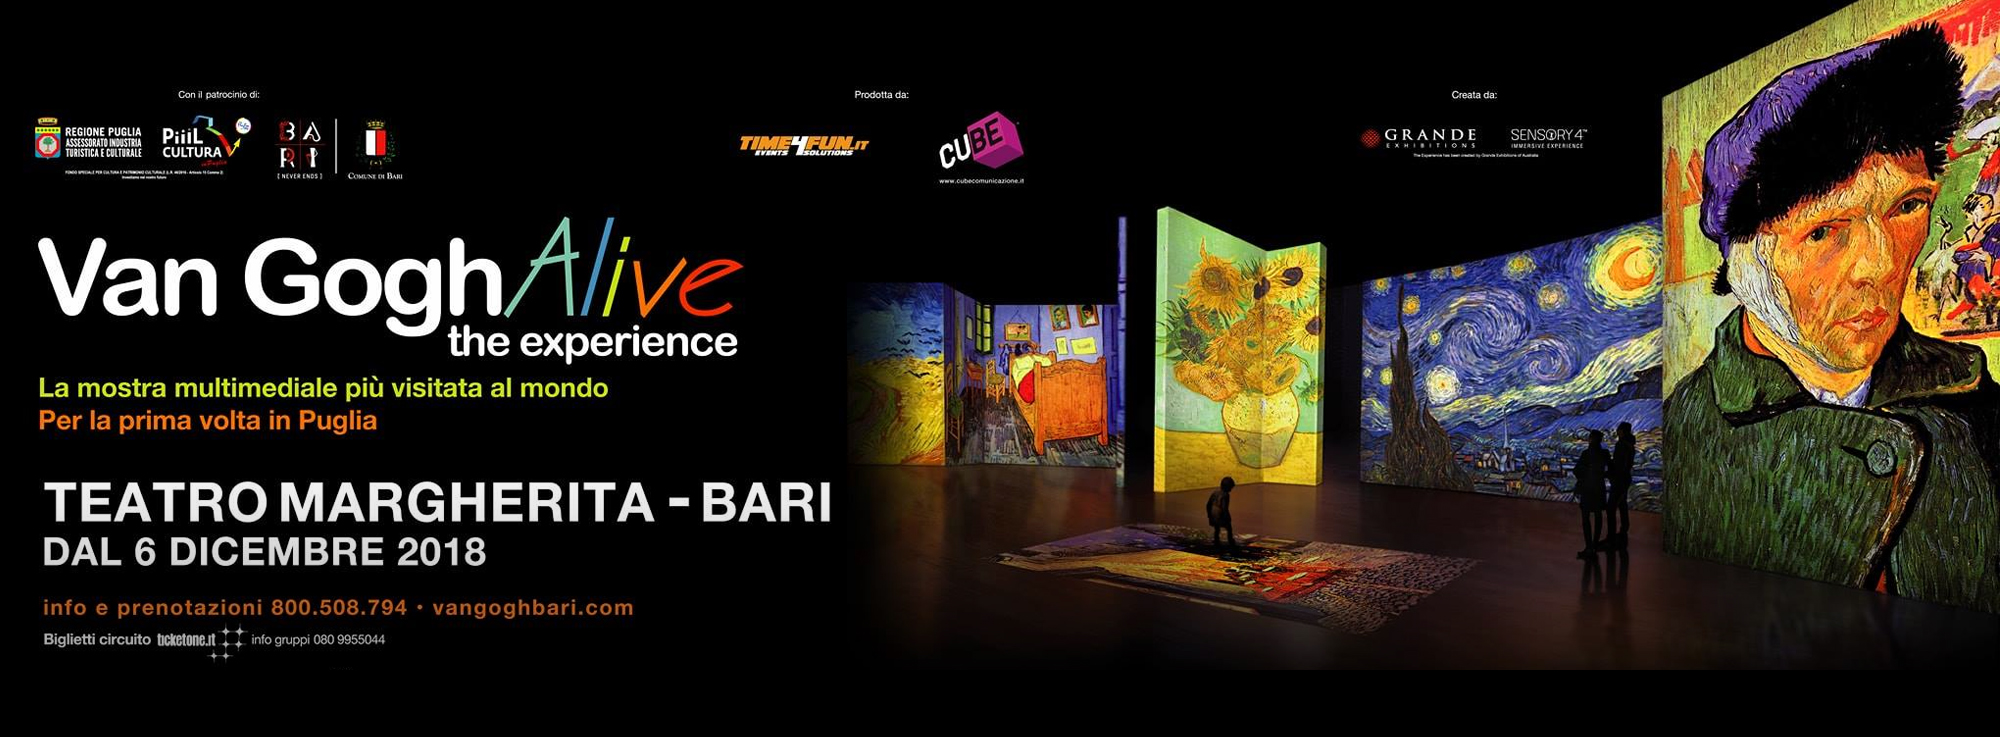 Bari: Van Gogh Alive - The Experience